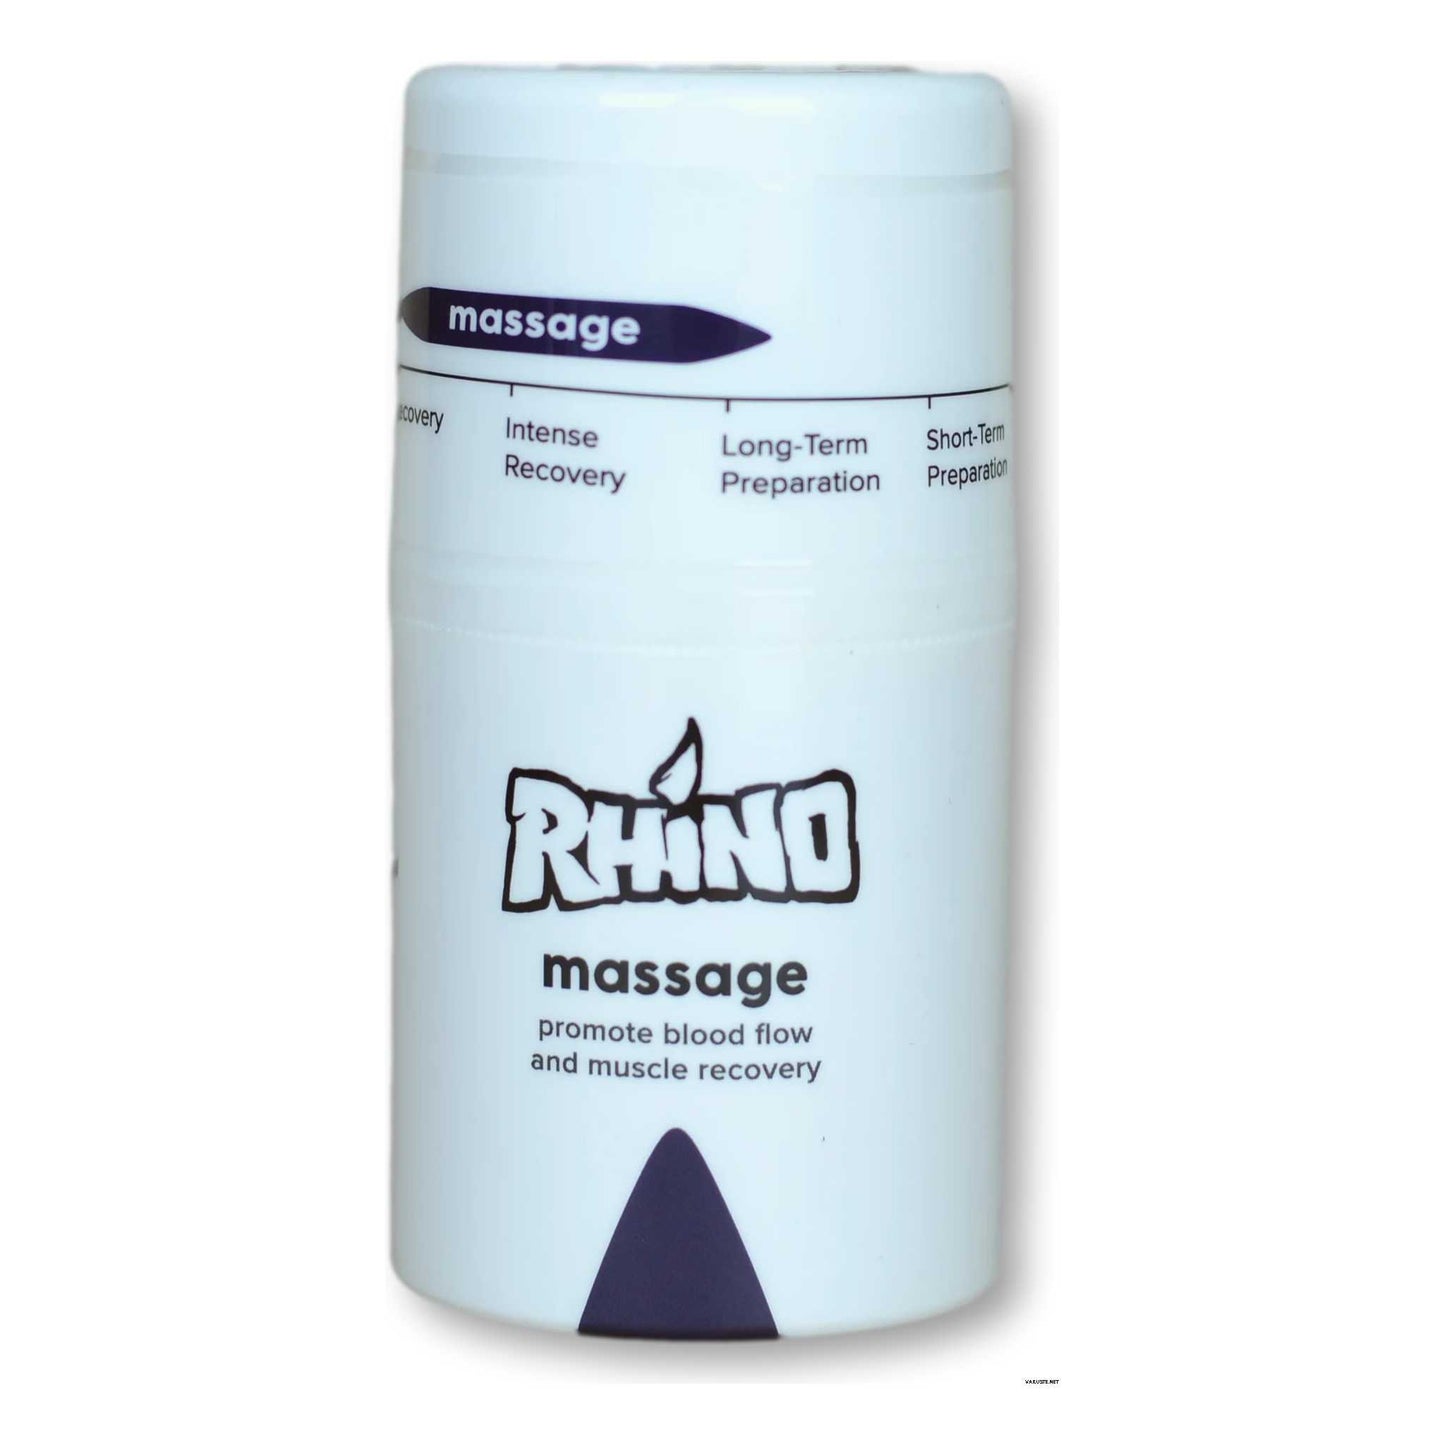 Rhino - Massage (1.7 oz) - Hold EmporiumMiscRhino Skin Solutions